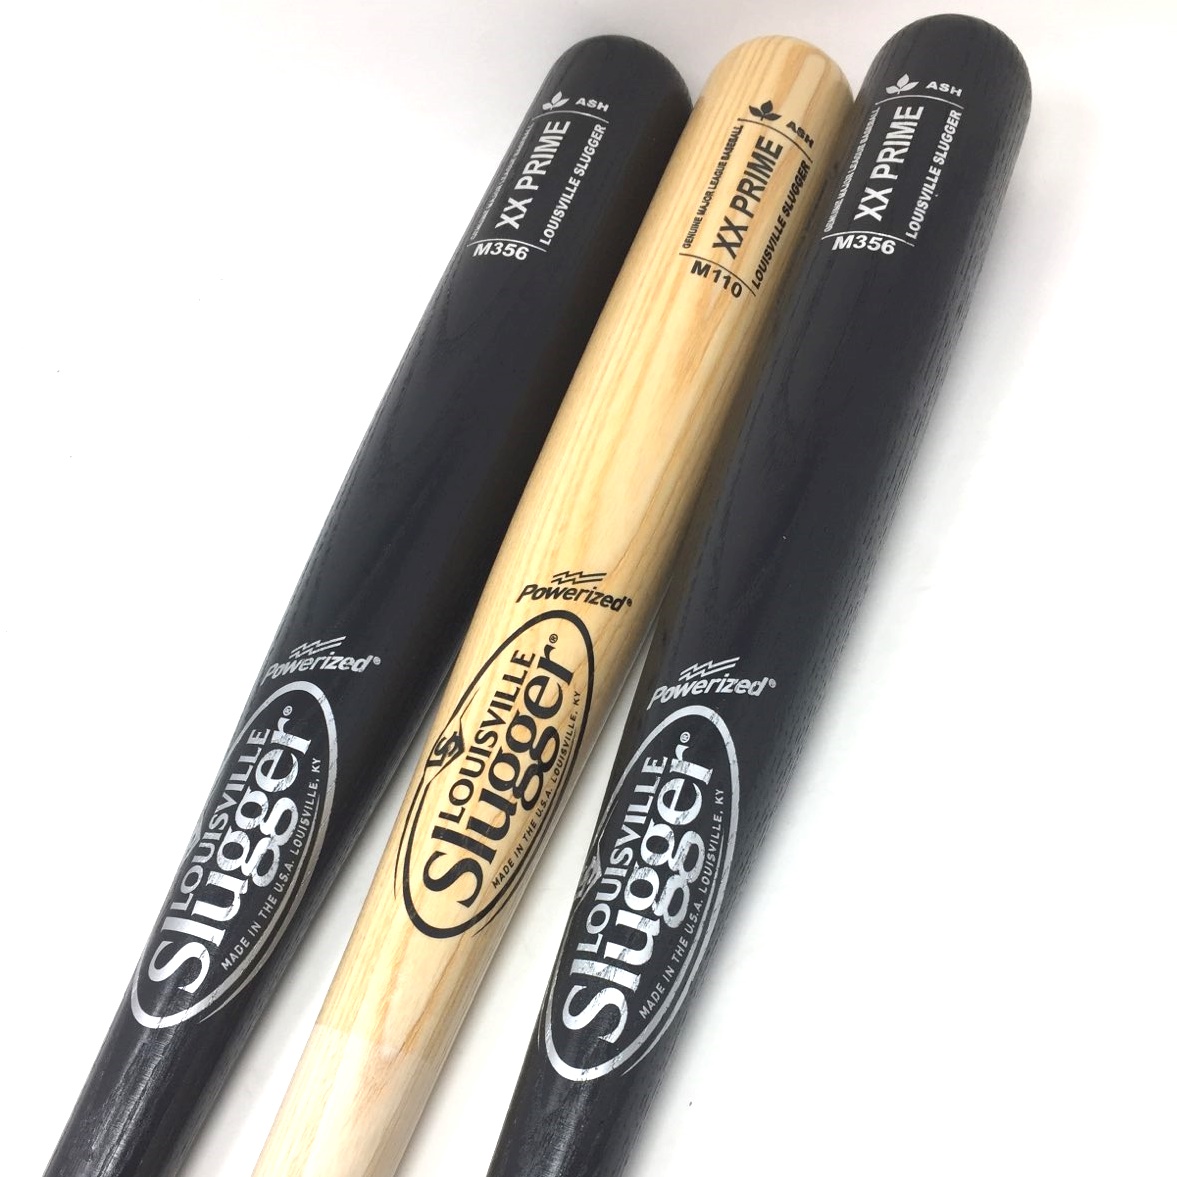 louisville-slugger-wood-baseball-bat-pack-33-5-inch-3-bats-xx-prime-ash BATPACK-0017 Louisville Does not apply <p>33.5 XX Prime Ash Wood Baseball Bats by Louisville Slugger. 33.5